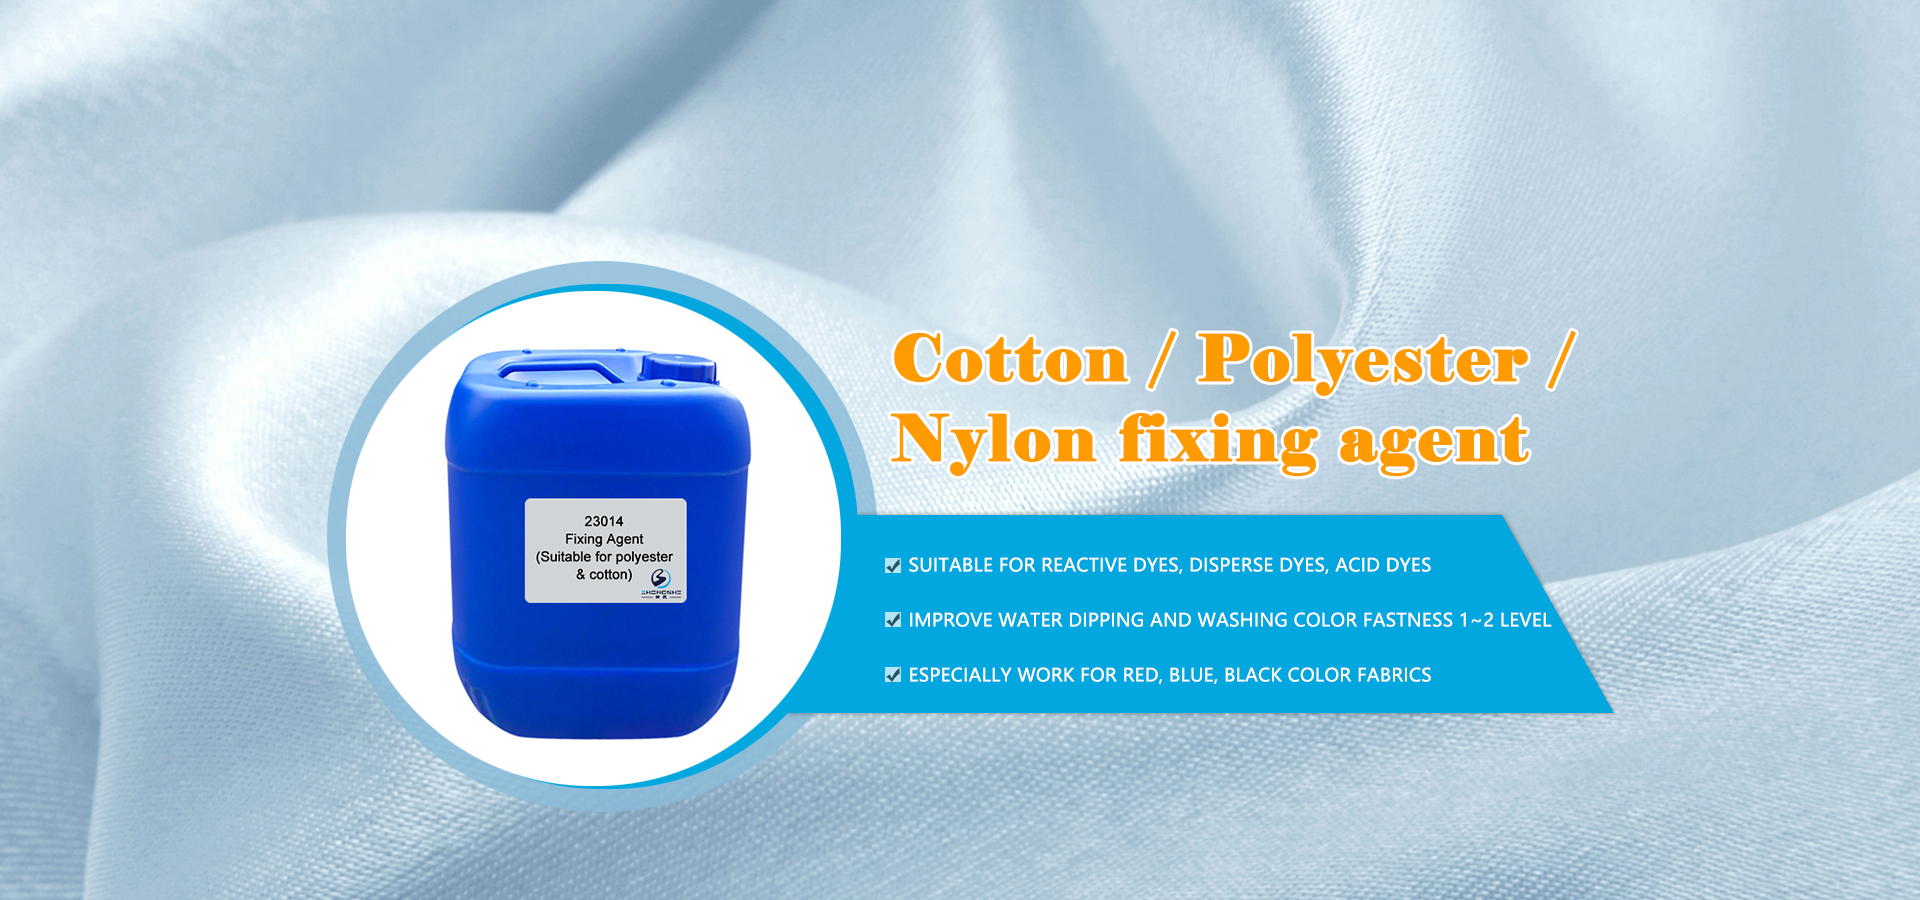 Cotton/Polyester/Nylon fixing agent